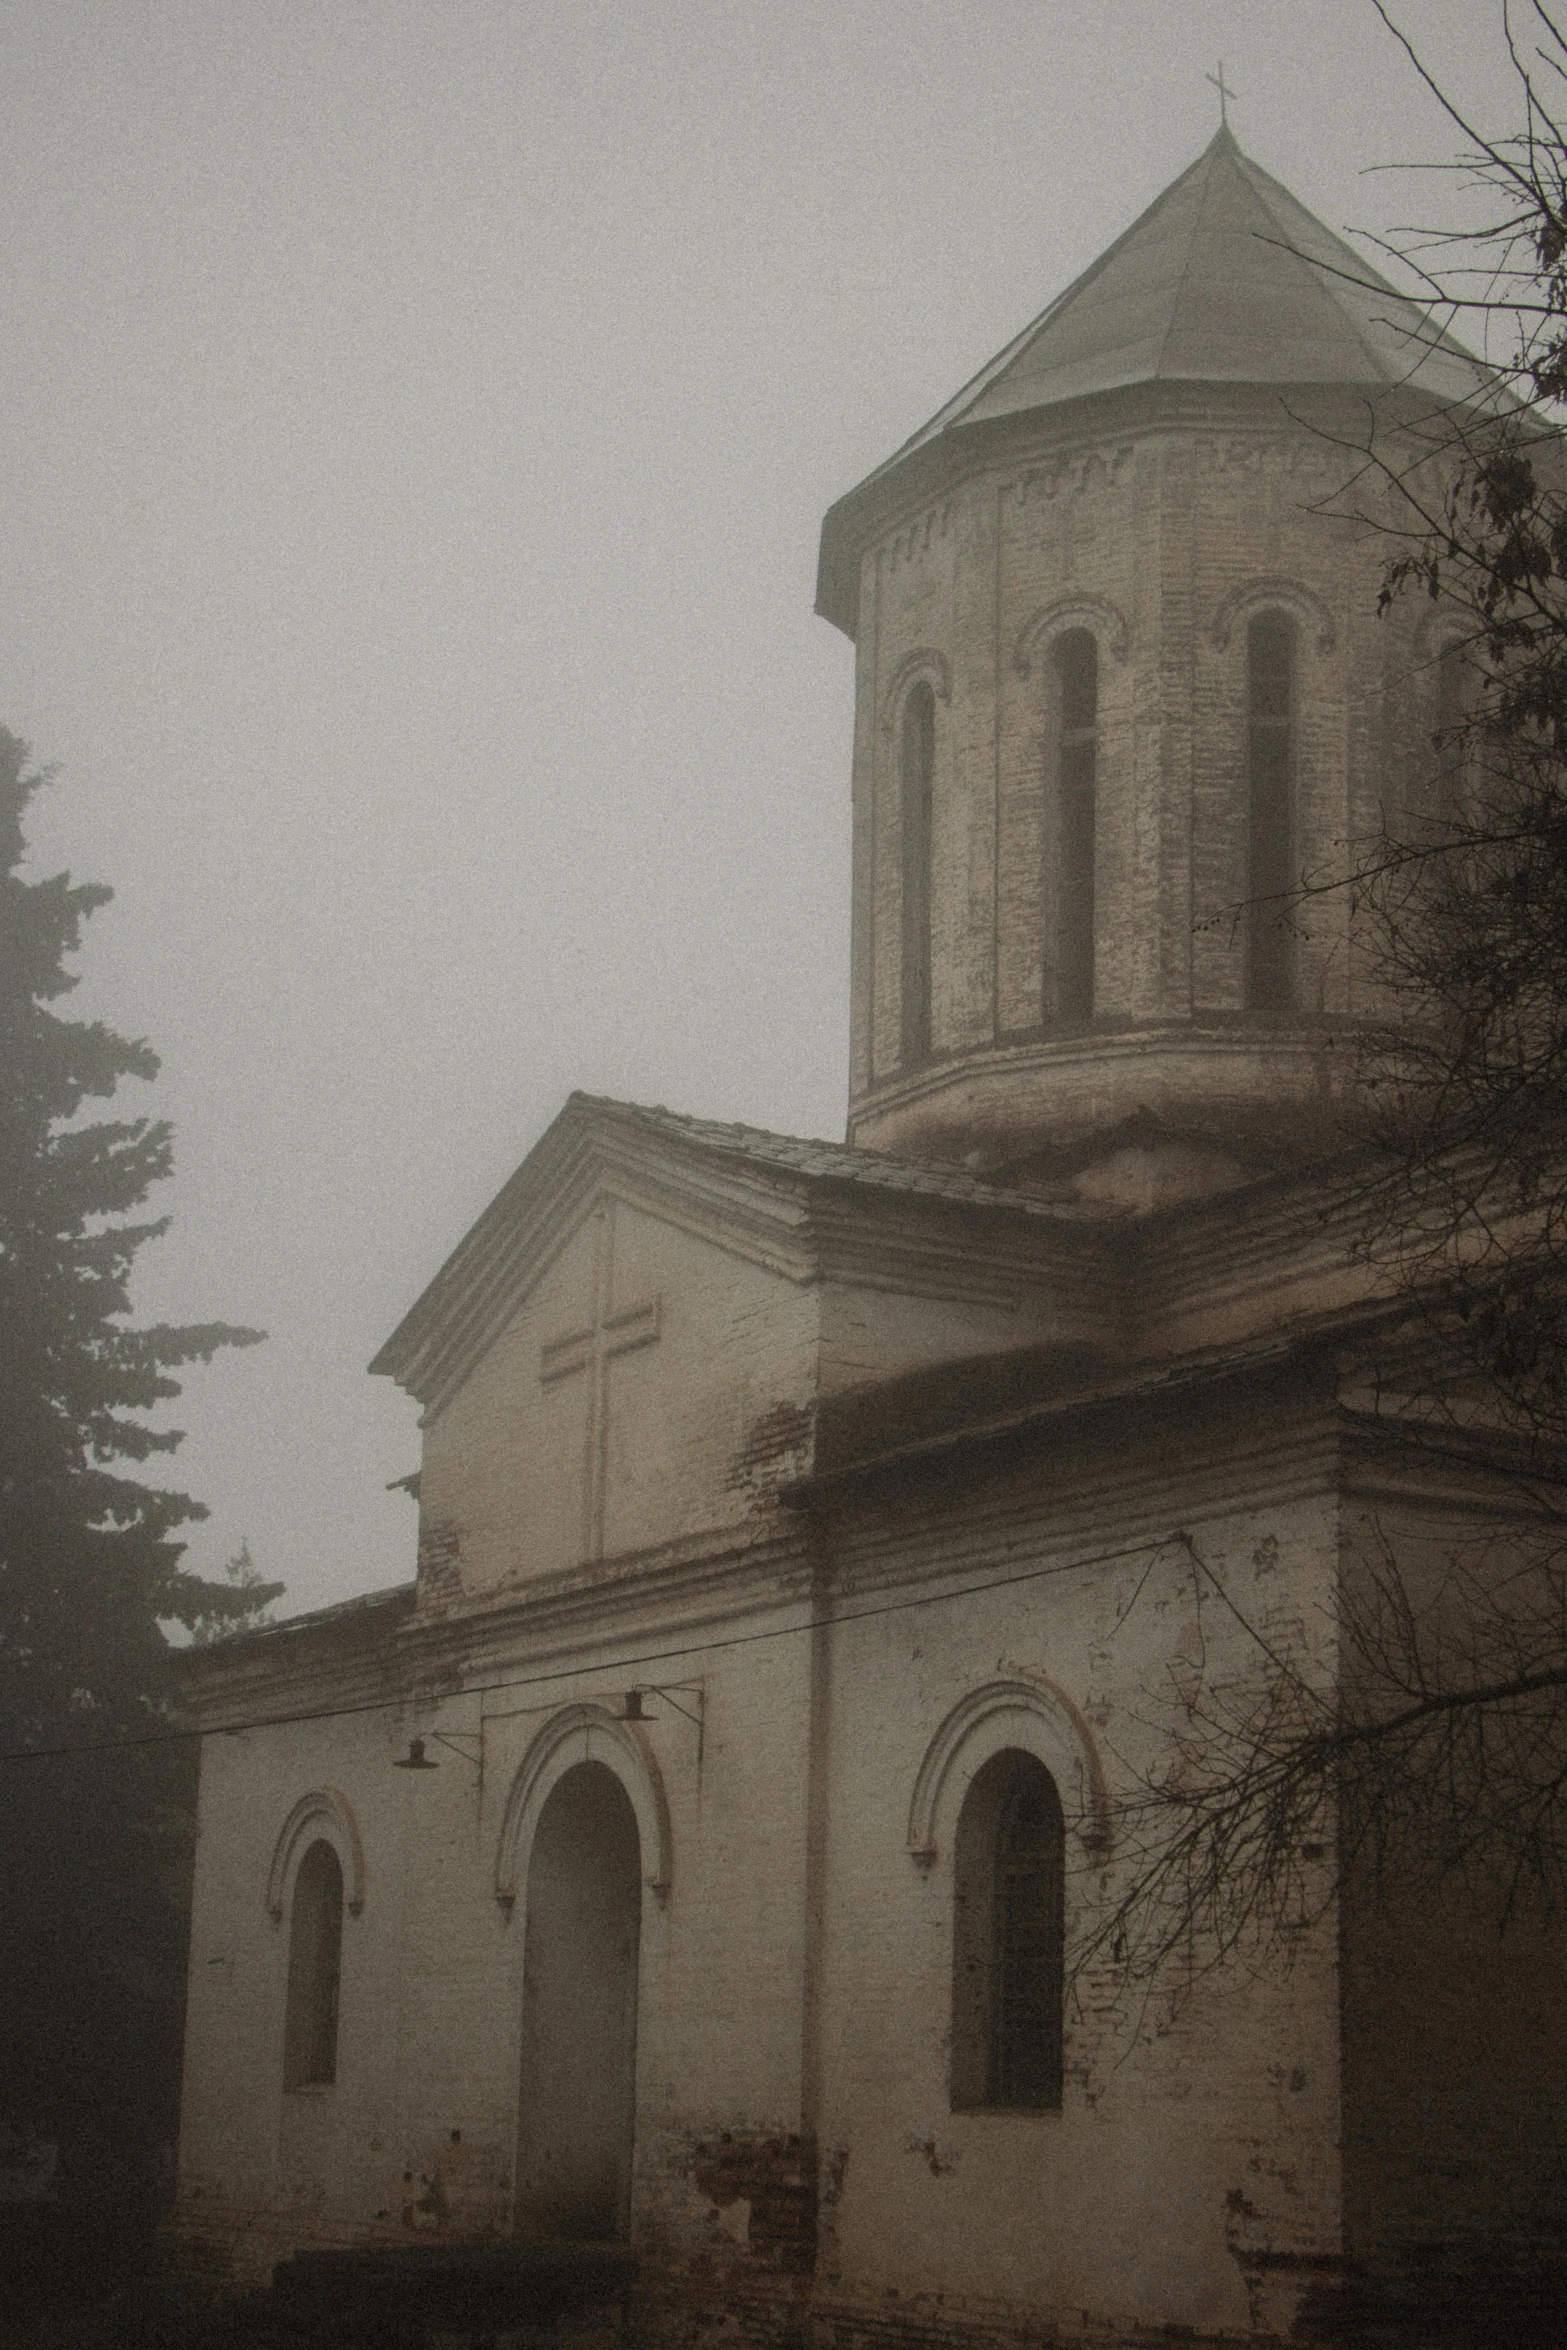 a tall church is shown against the sky